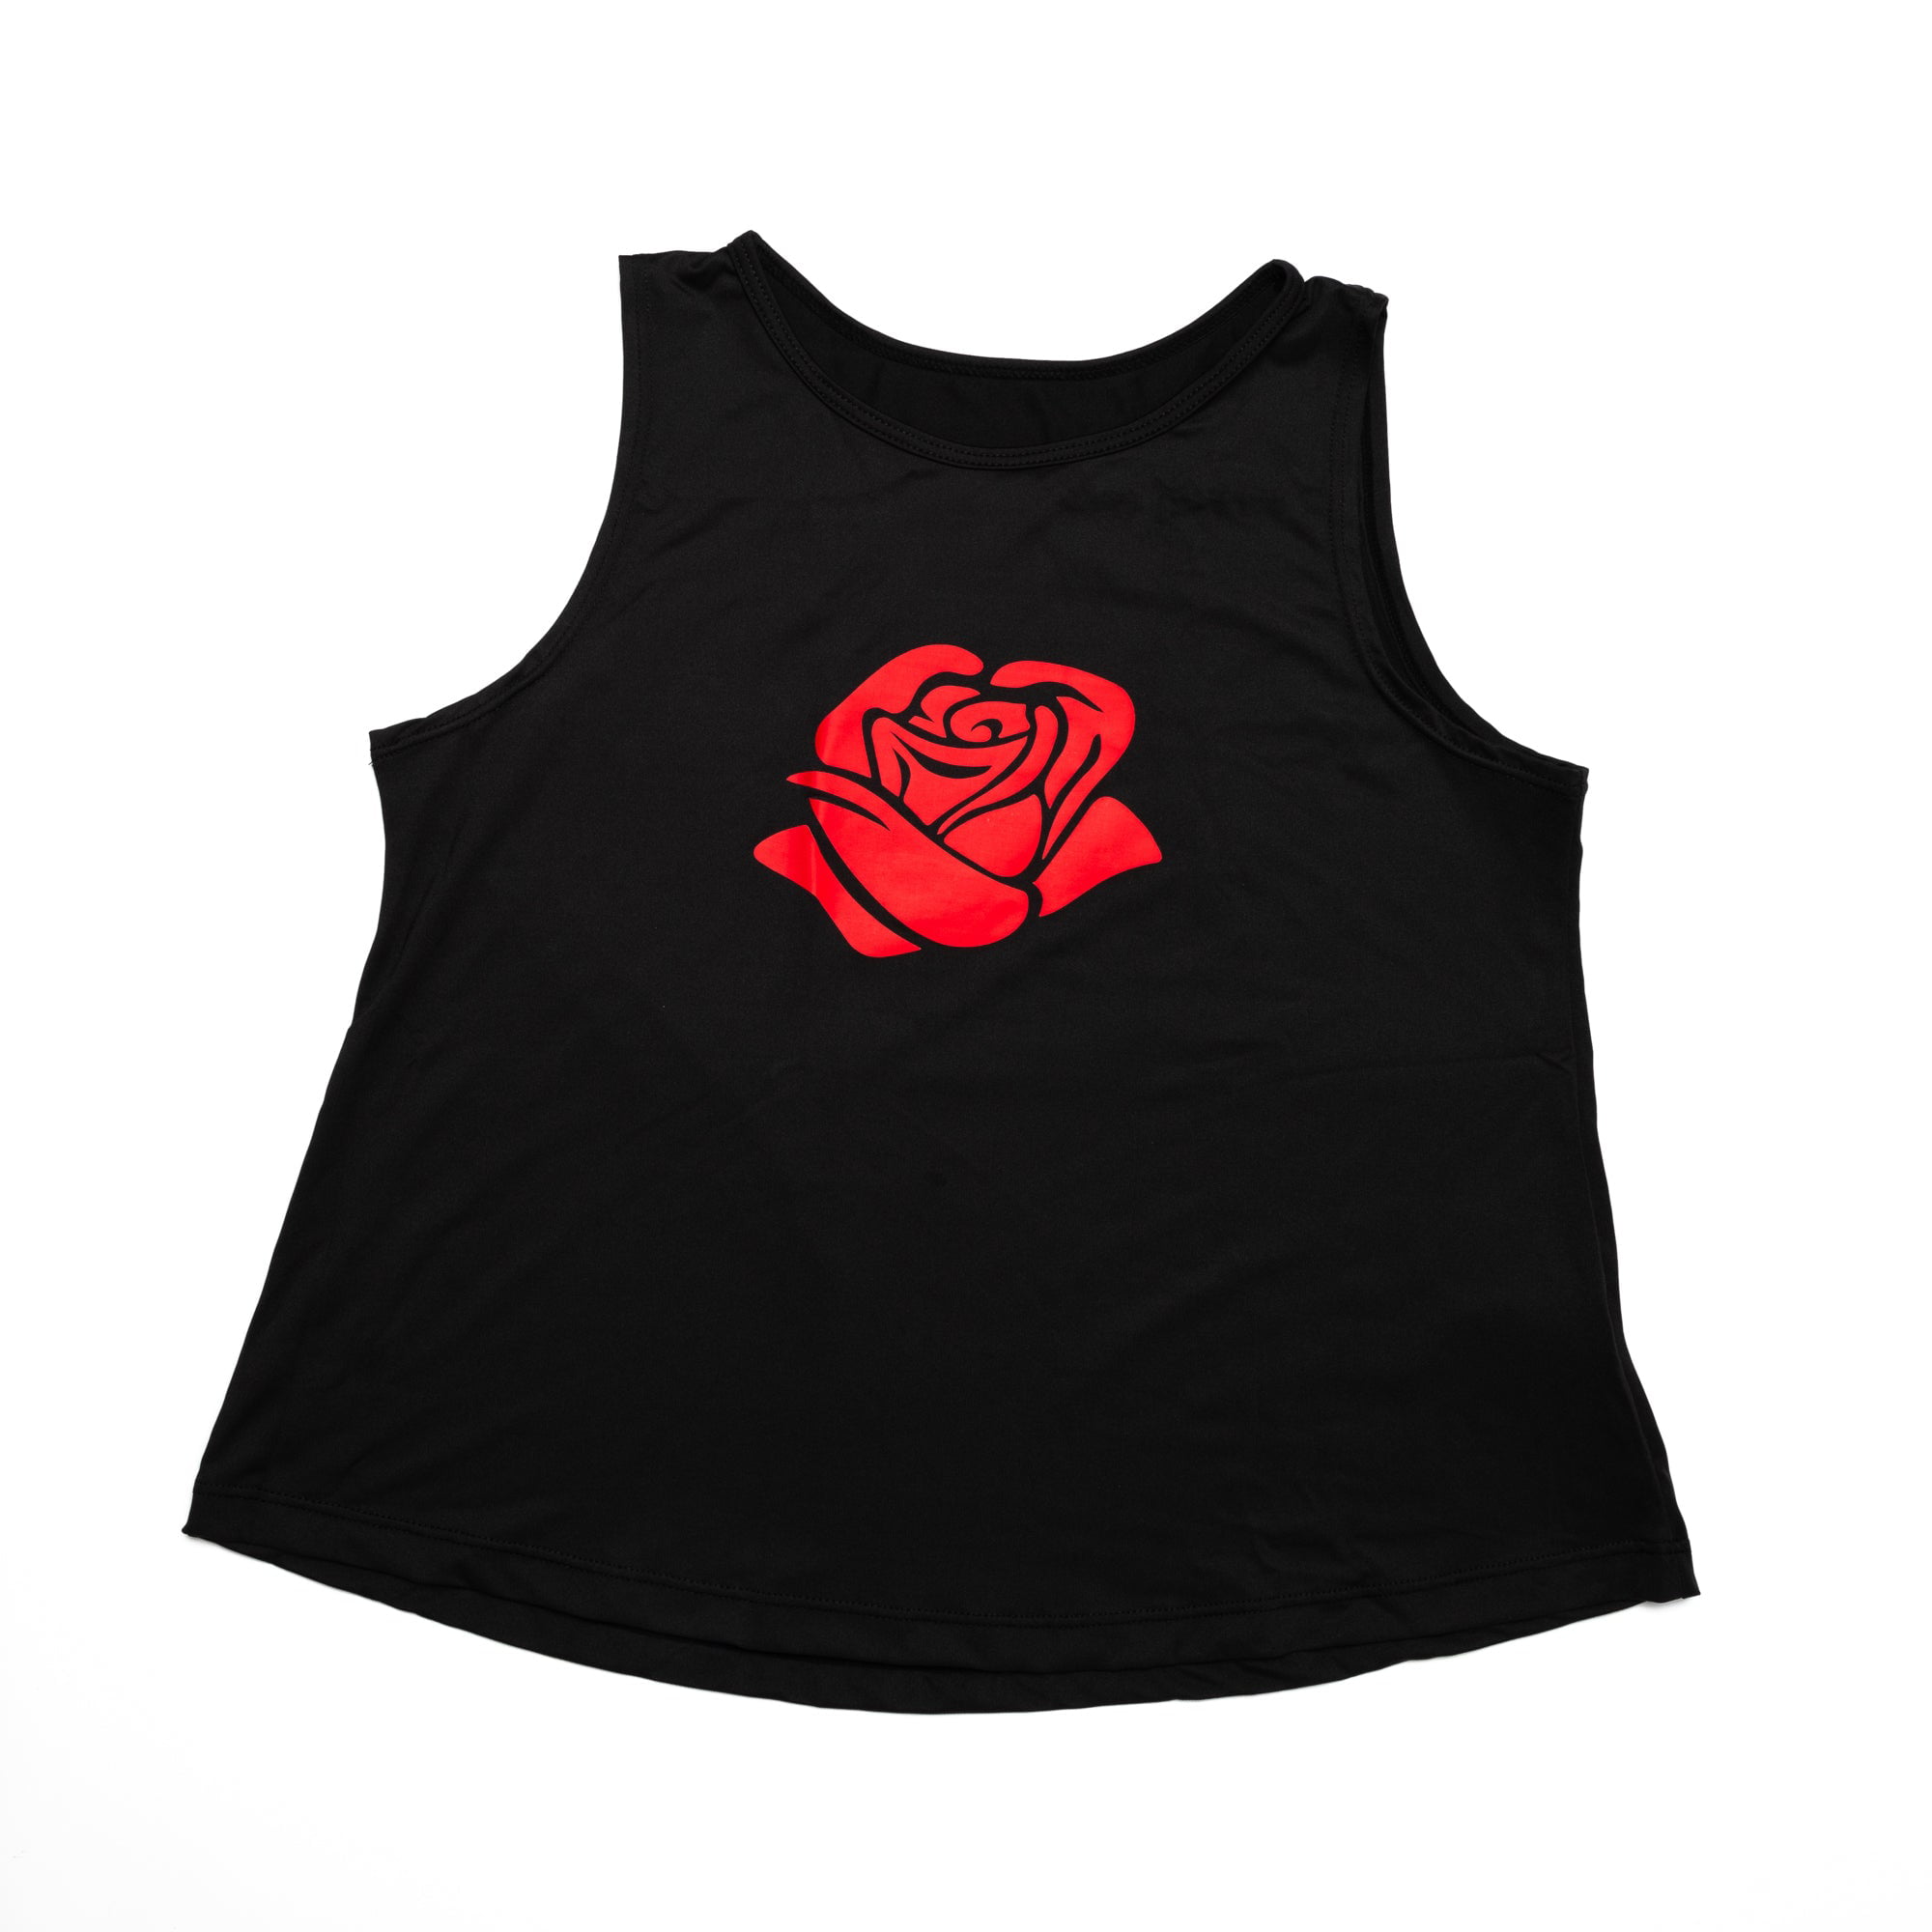 Red Rose Tank - Walmart.com